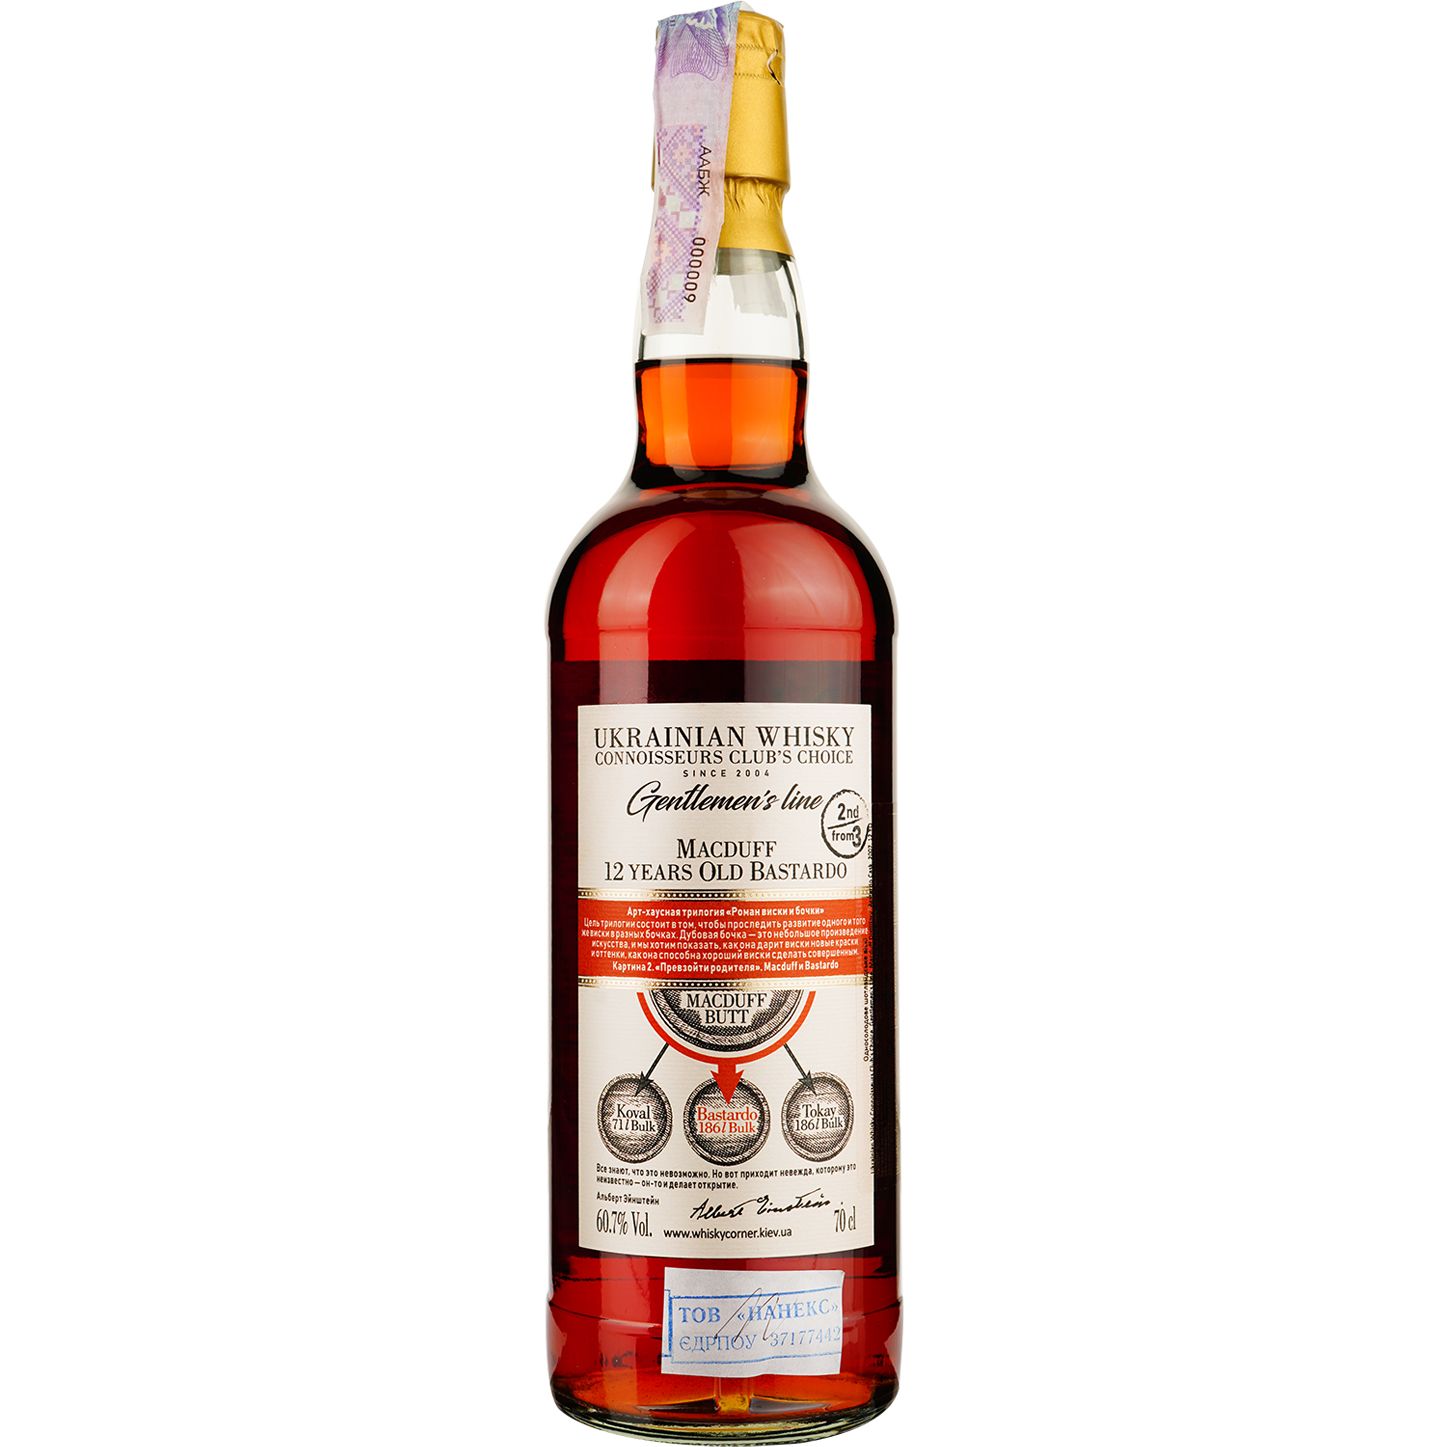 Виски Macduff 12 Years Old Bastardo Single Malt Scotch Whisky, в подарочной упаковке, 60,7%, 0,7 л - фото 4